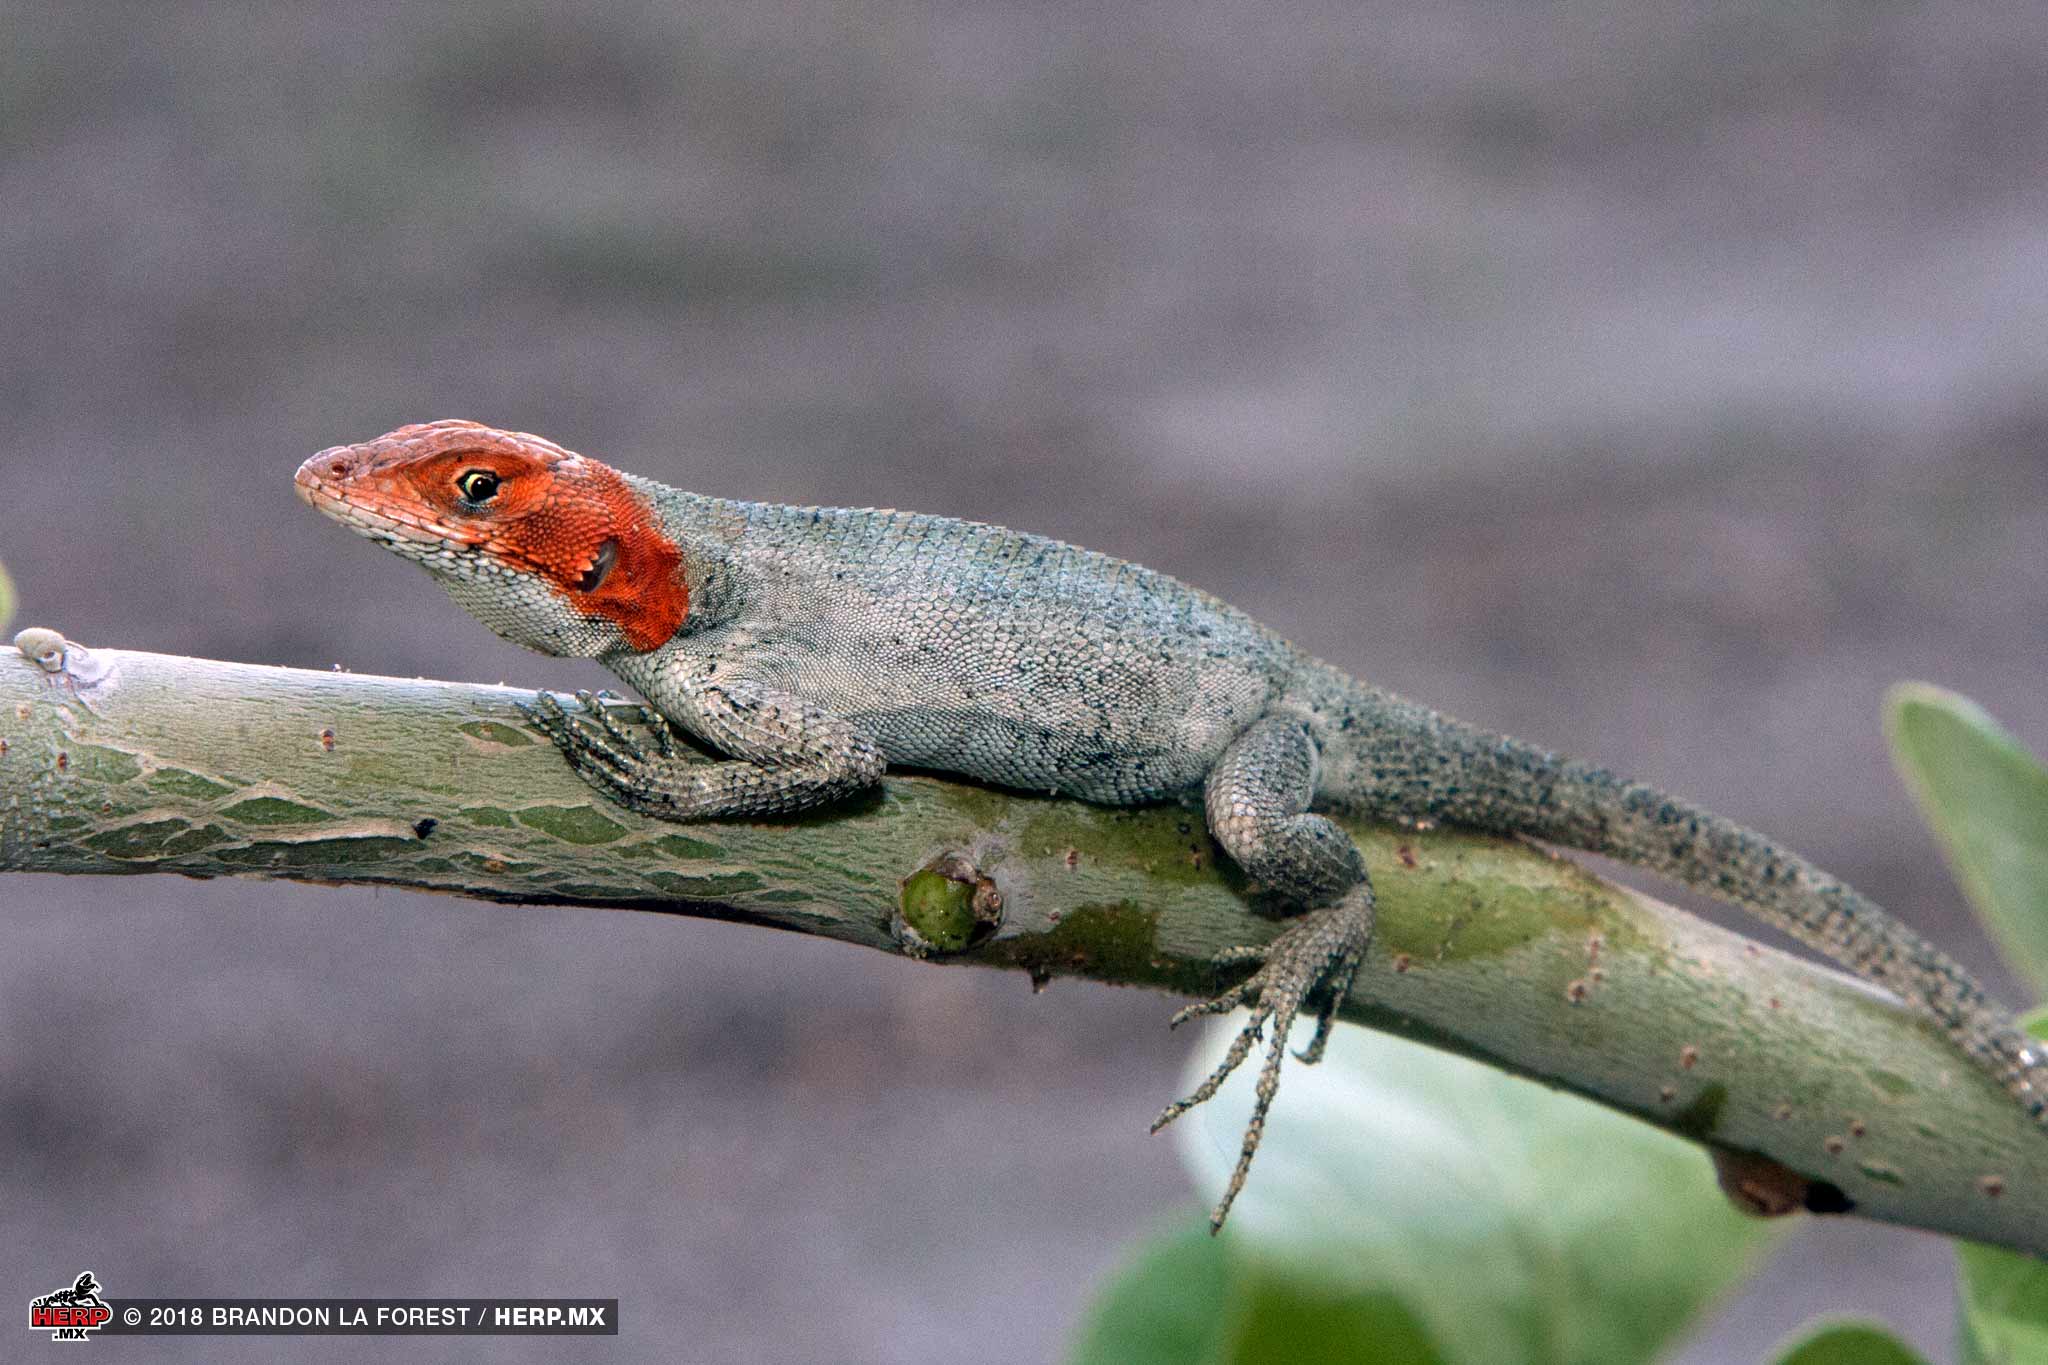 Cerralvo Island Spiny Lizard (<em>Sceloporus grandaevus</em>) <br />© Brandon La Forest / HERP.MX